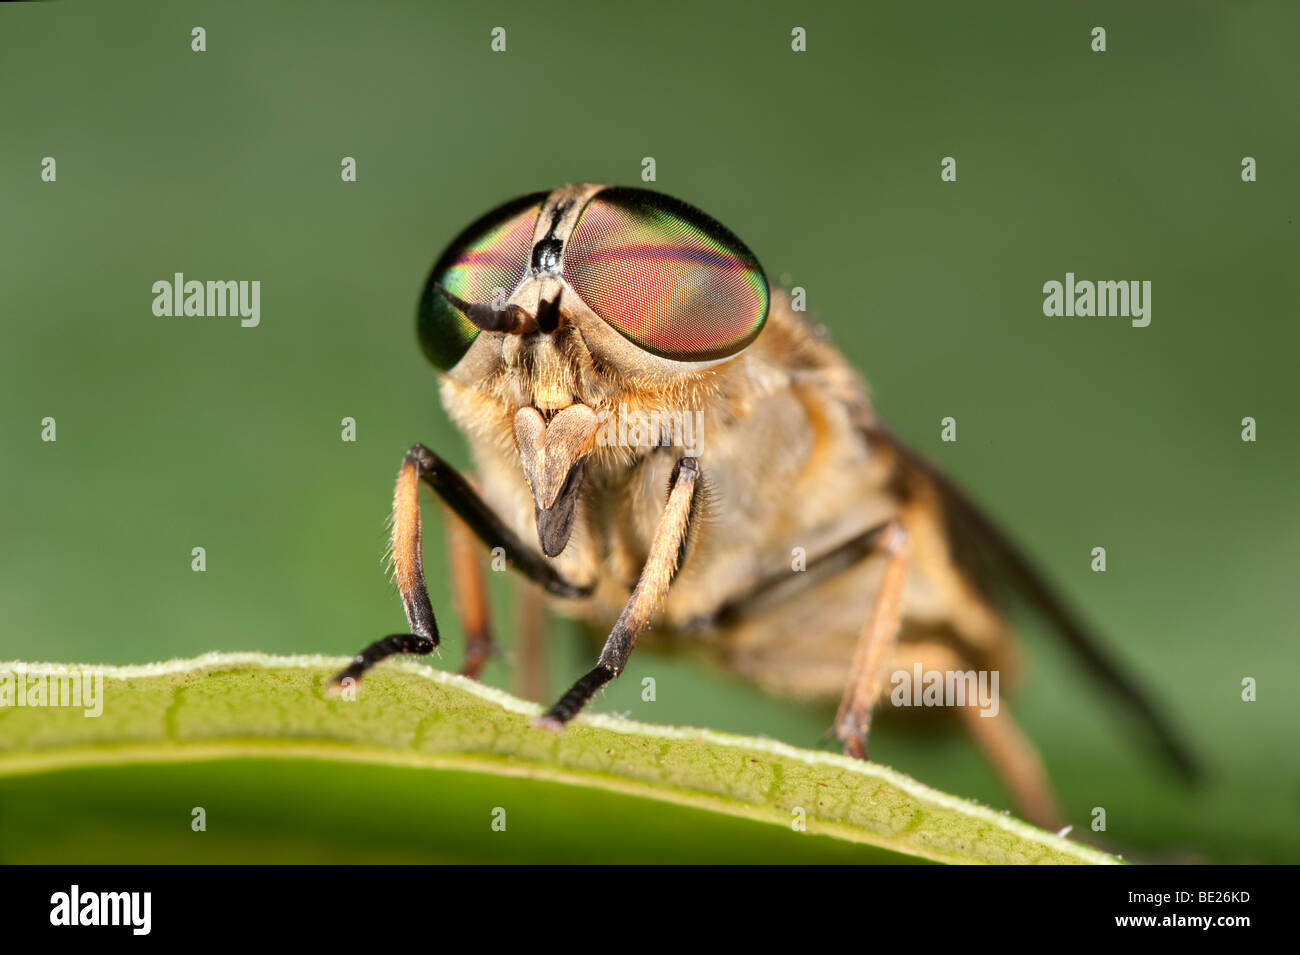 Horse Fly Tabanus bromius macro close up showing large compound eye Stock Photo